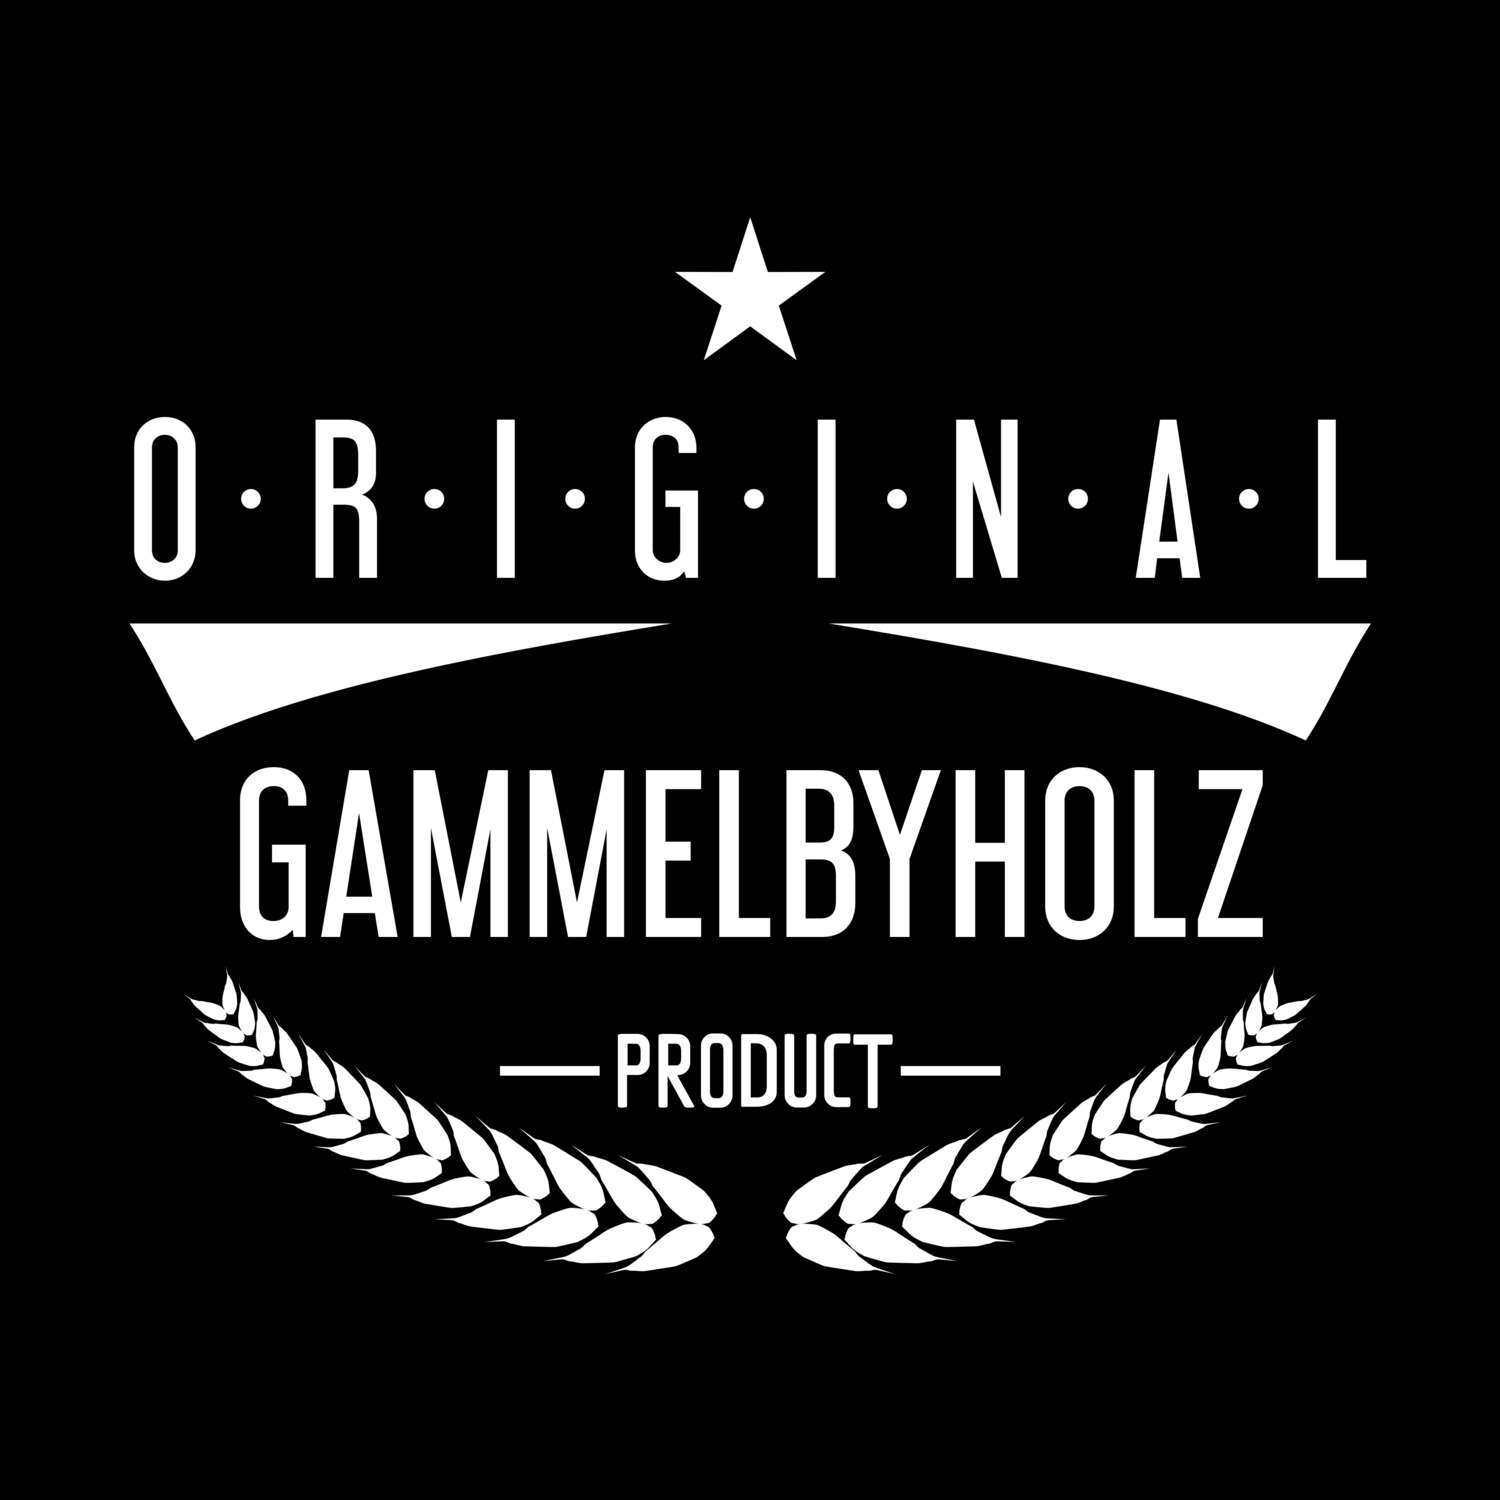 Gammelbyholz T-Shirt »Original Product«